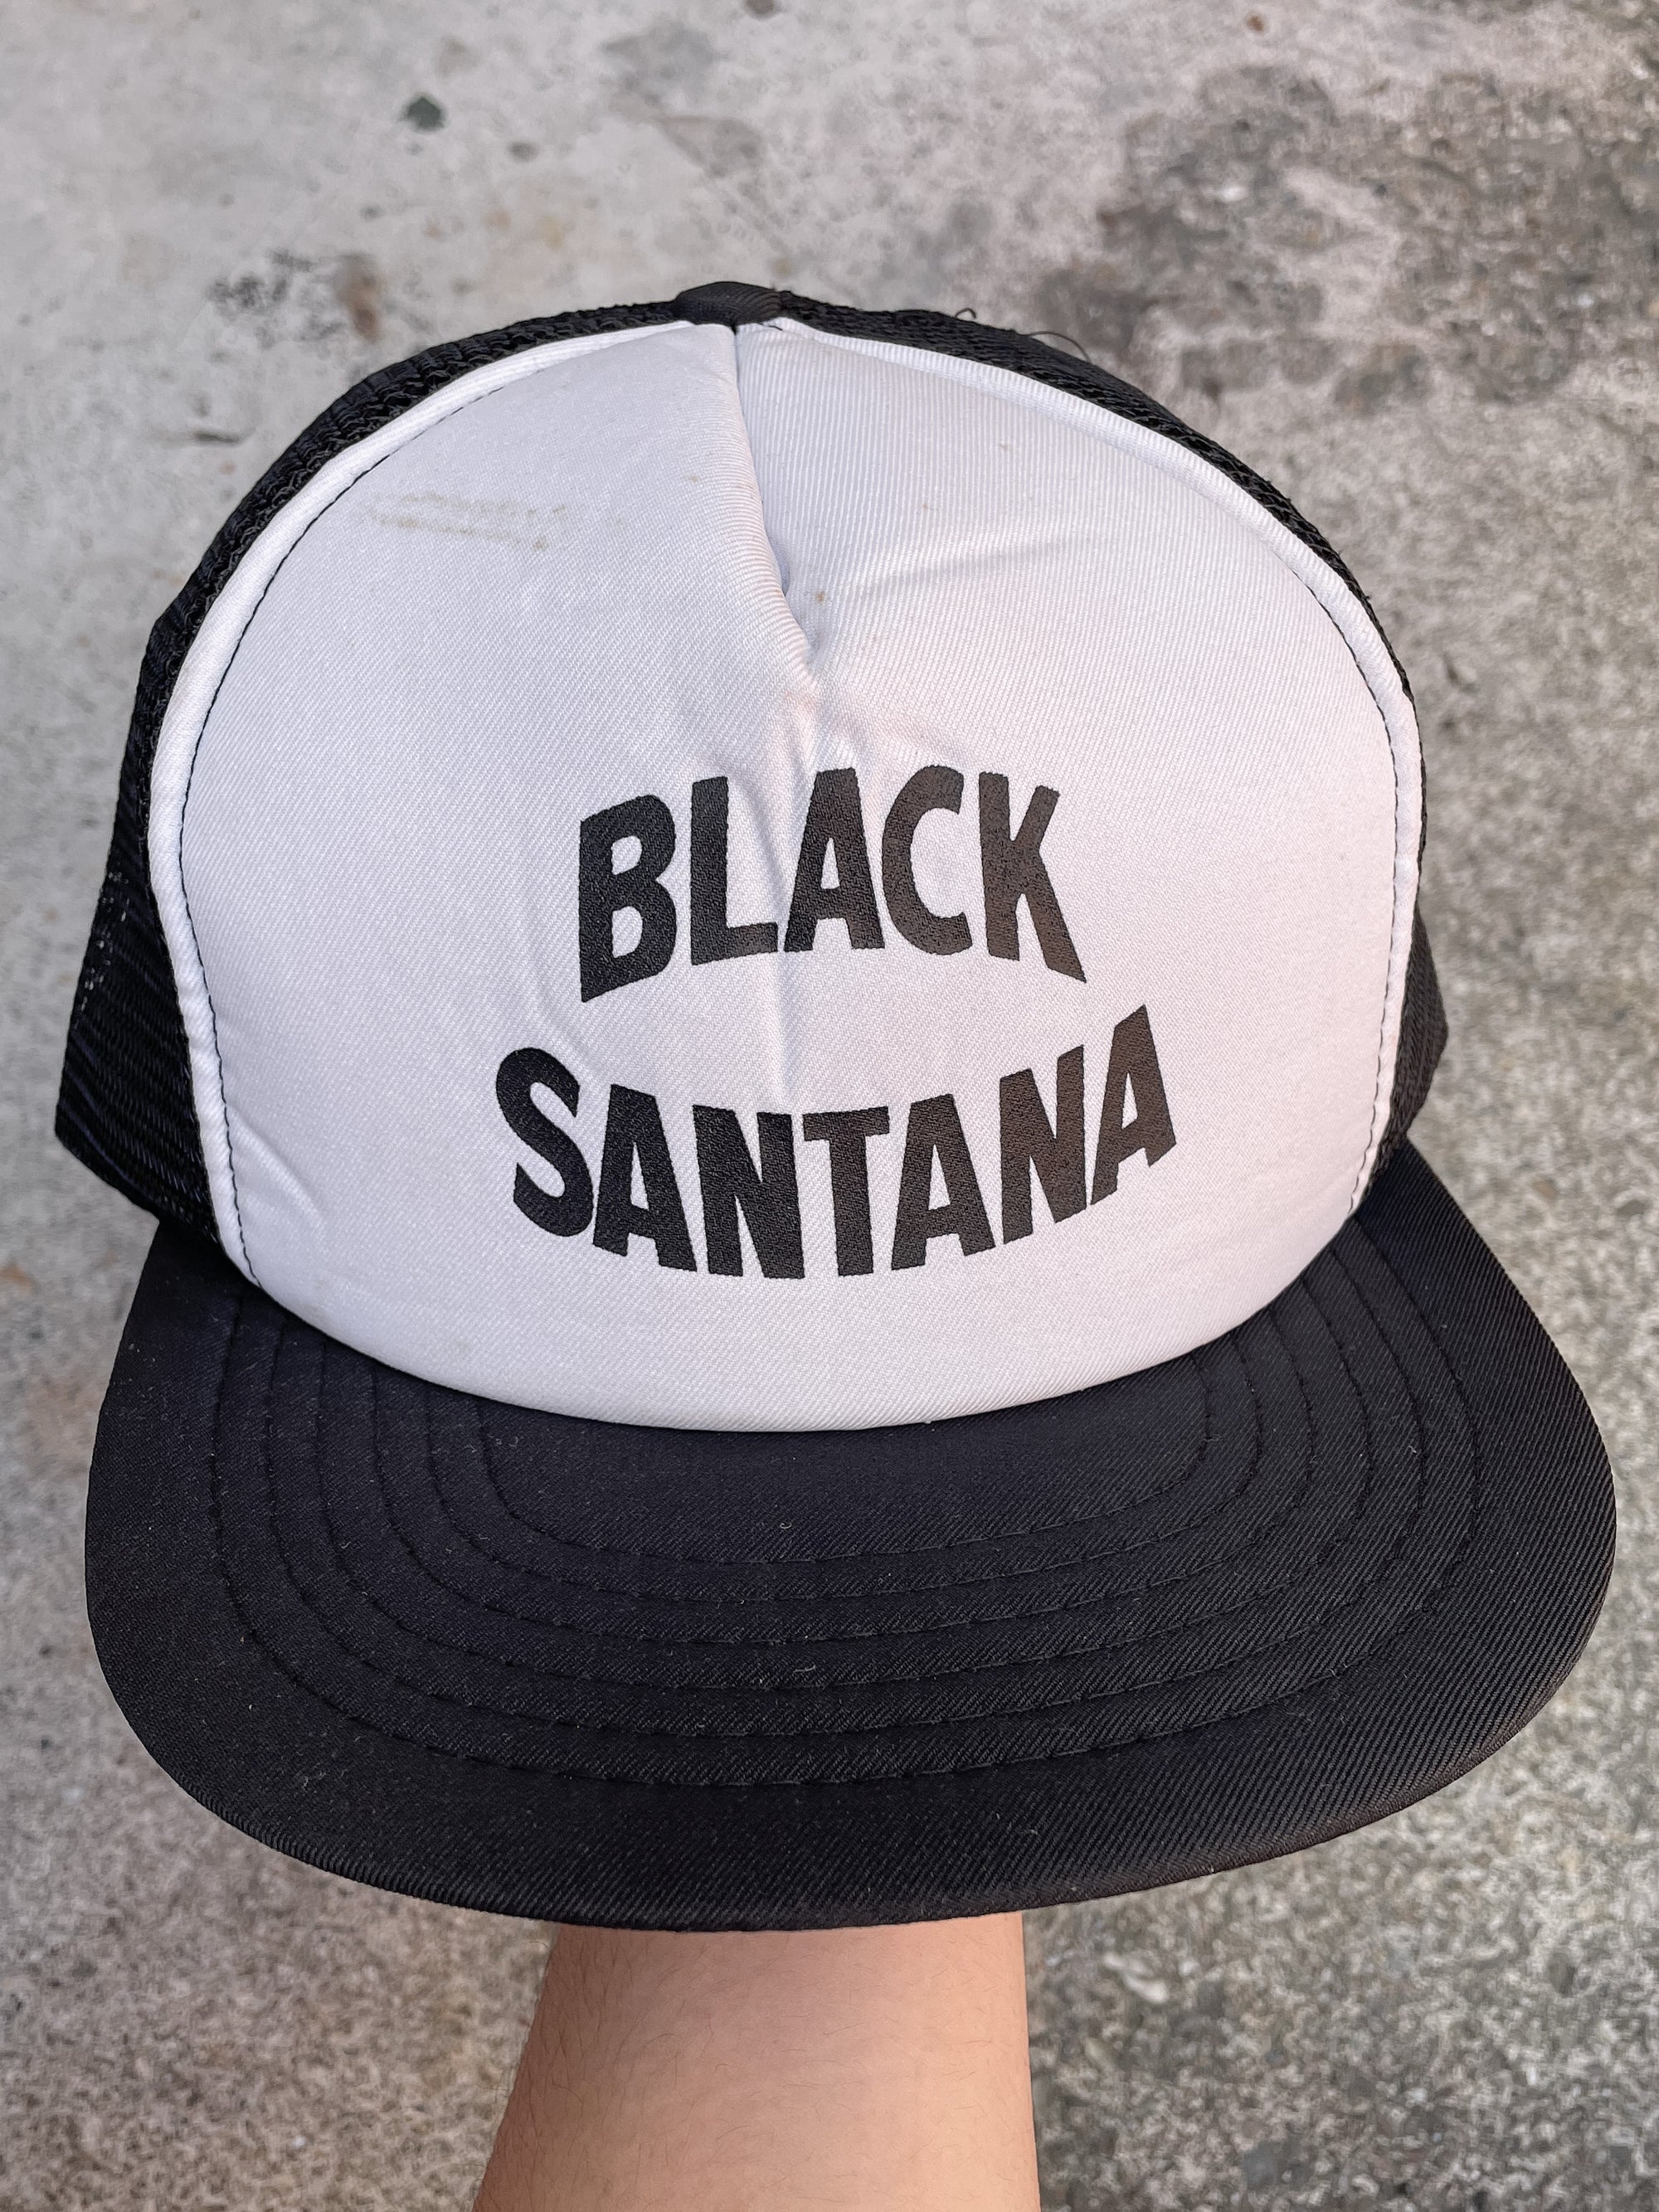 1990s “Black Santana” Trucker Hat